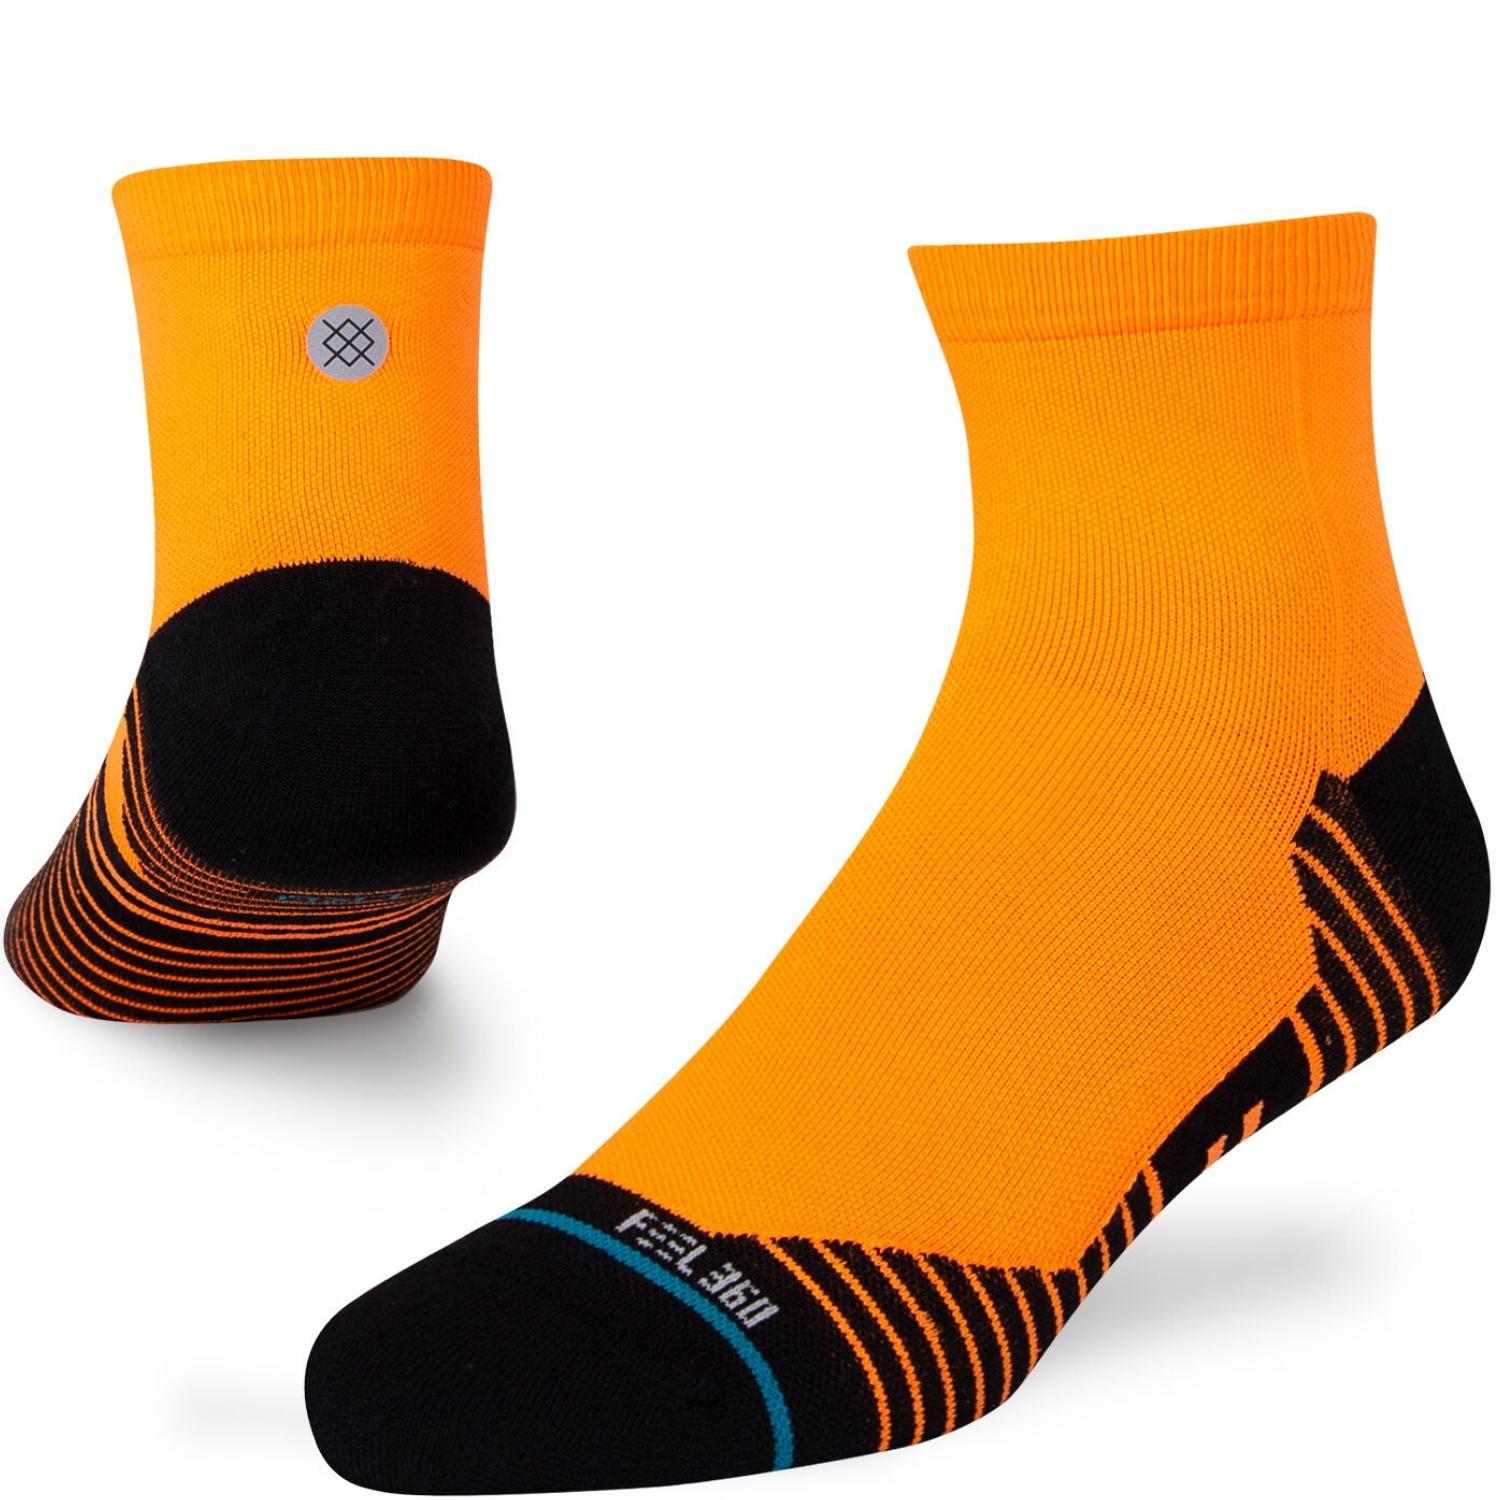 Stance Hiatus QTR Quarter Performance Socks - Neon Orange - Unisex Running/Training Socks by Stance